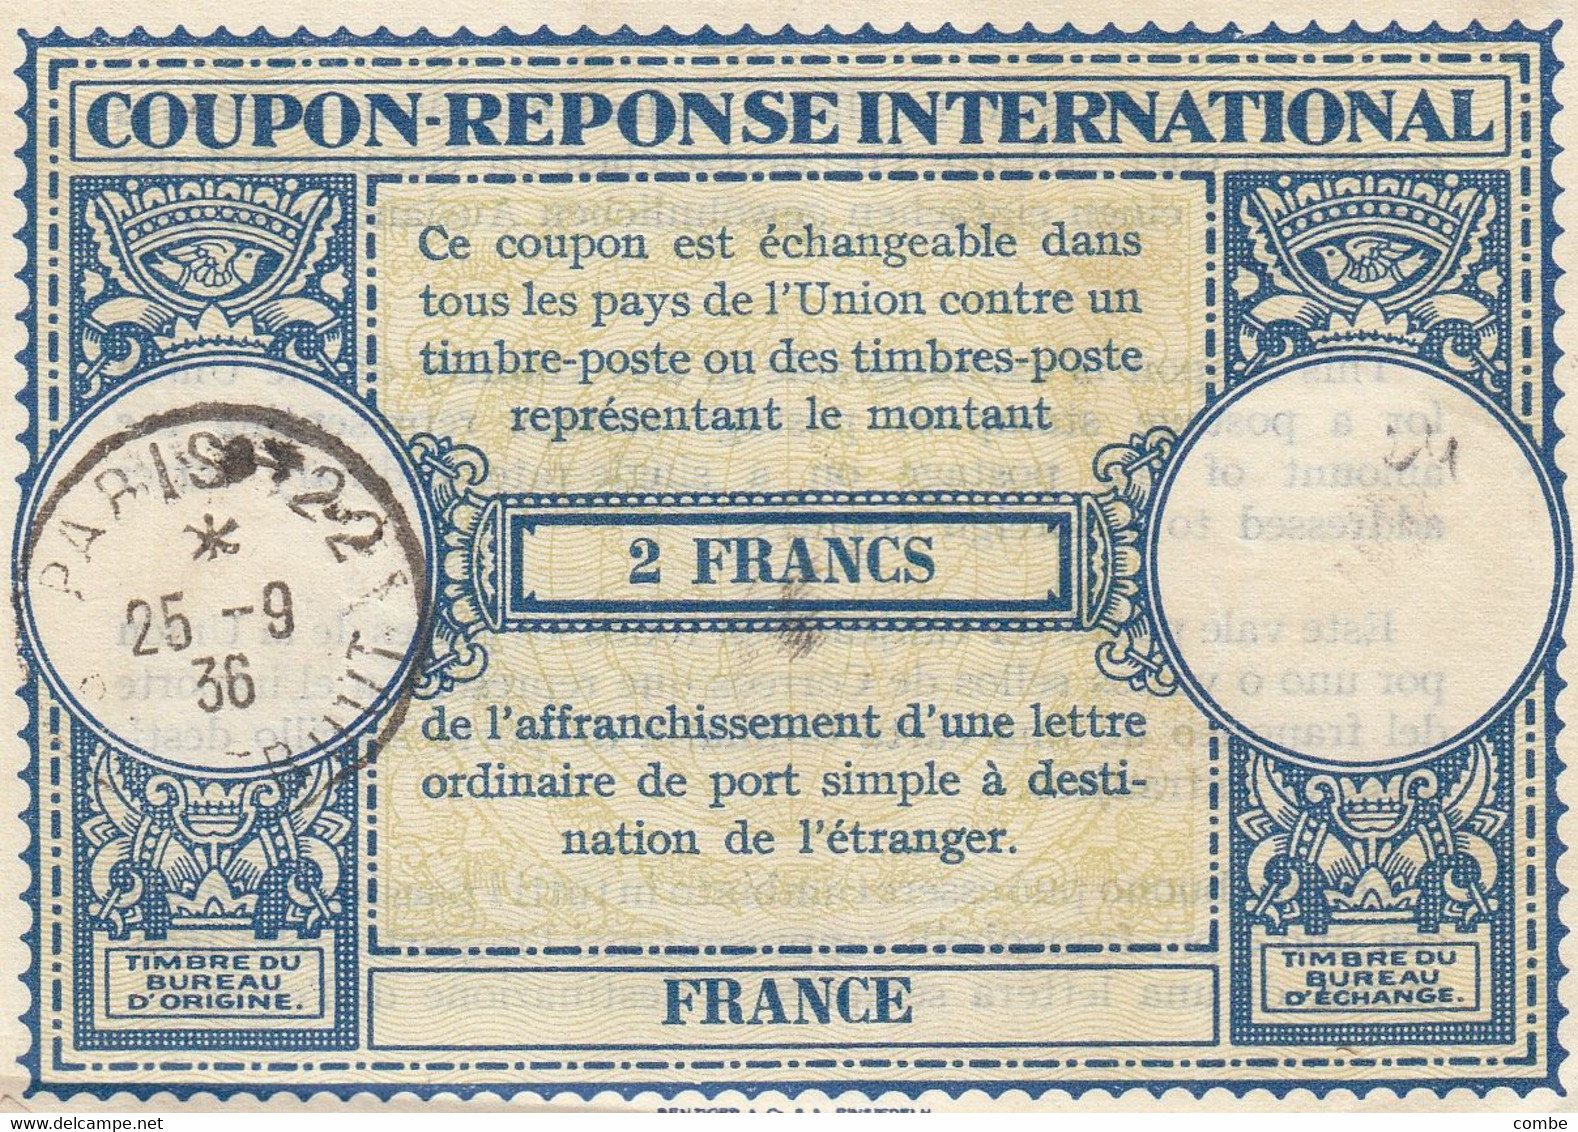 COUPON-REPONSE INTERNATIONAL. FRANCE. INTERNATIONAL REPLY. 2 FRANCS. PARIS 22 1936        /  2 - Buoni Risposte